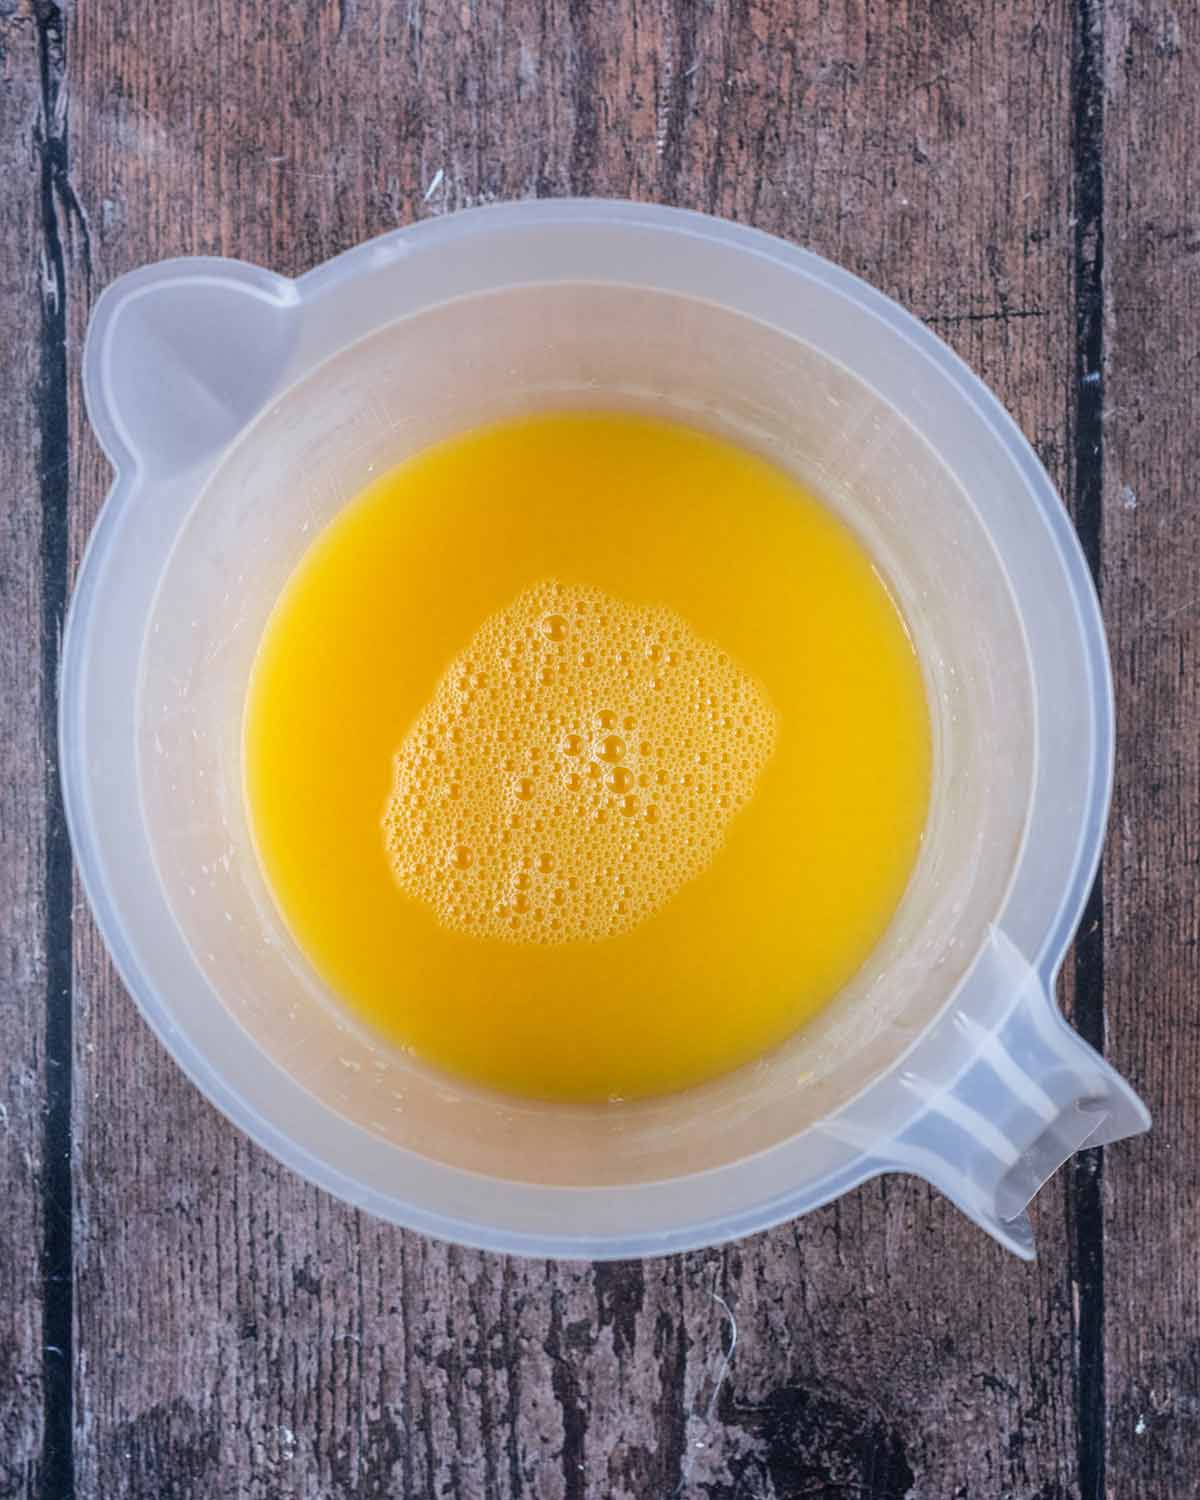 The gelatine mixture added to a jug of orange juice.